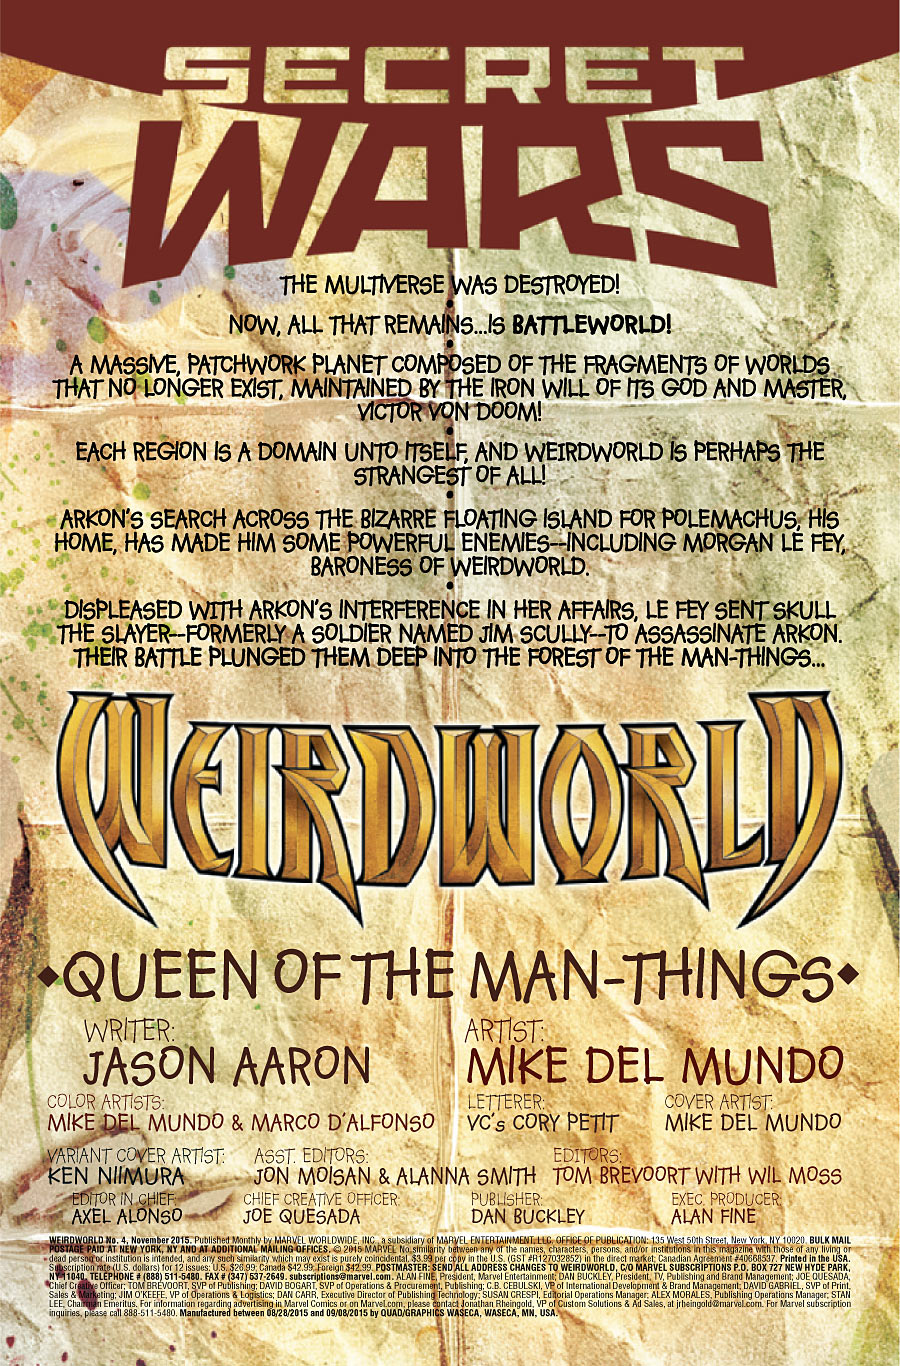 Weirdworld #4